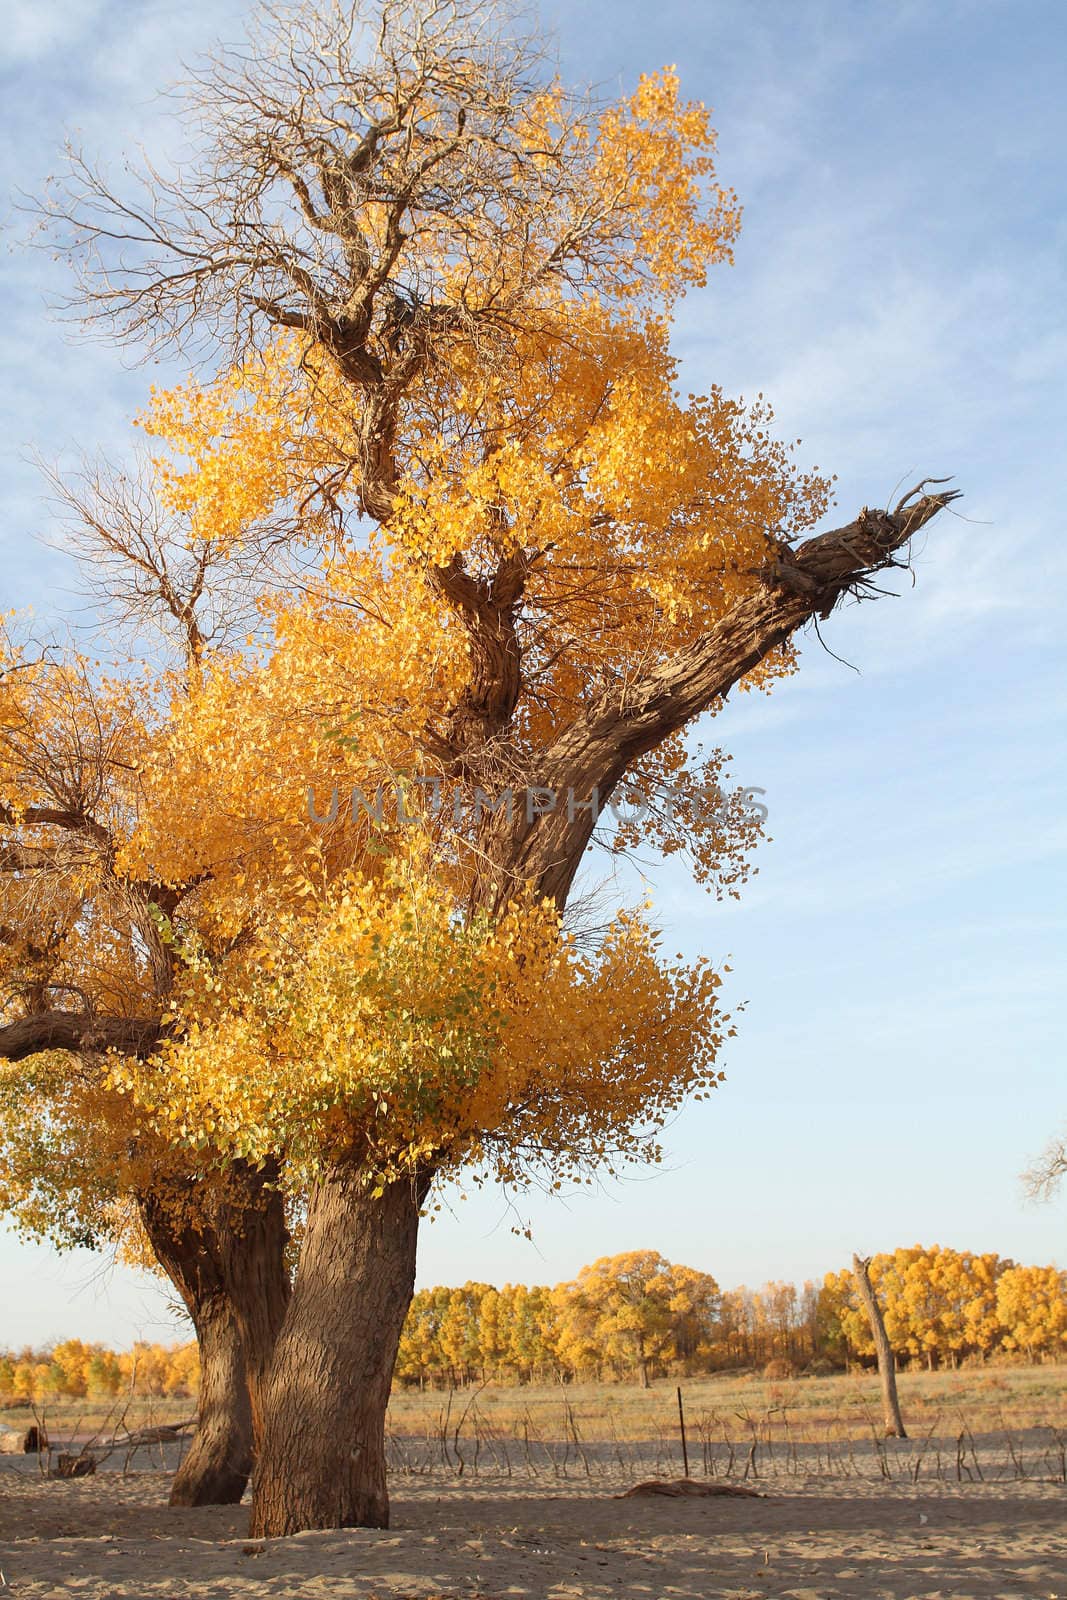 Diversifolious Poplar in the northwest desert in China by slimdragon